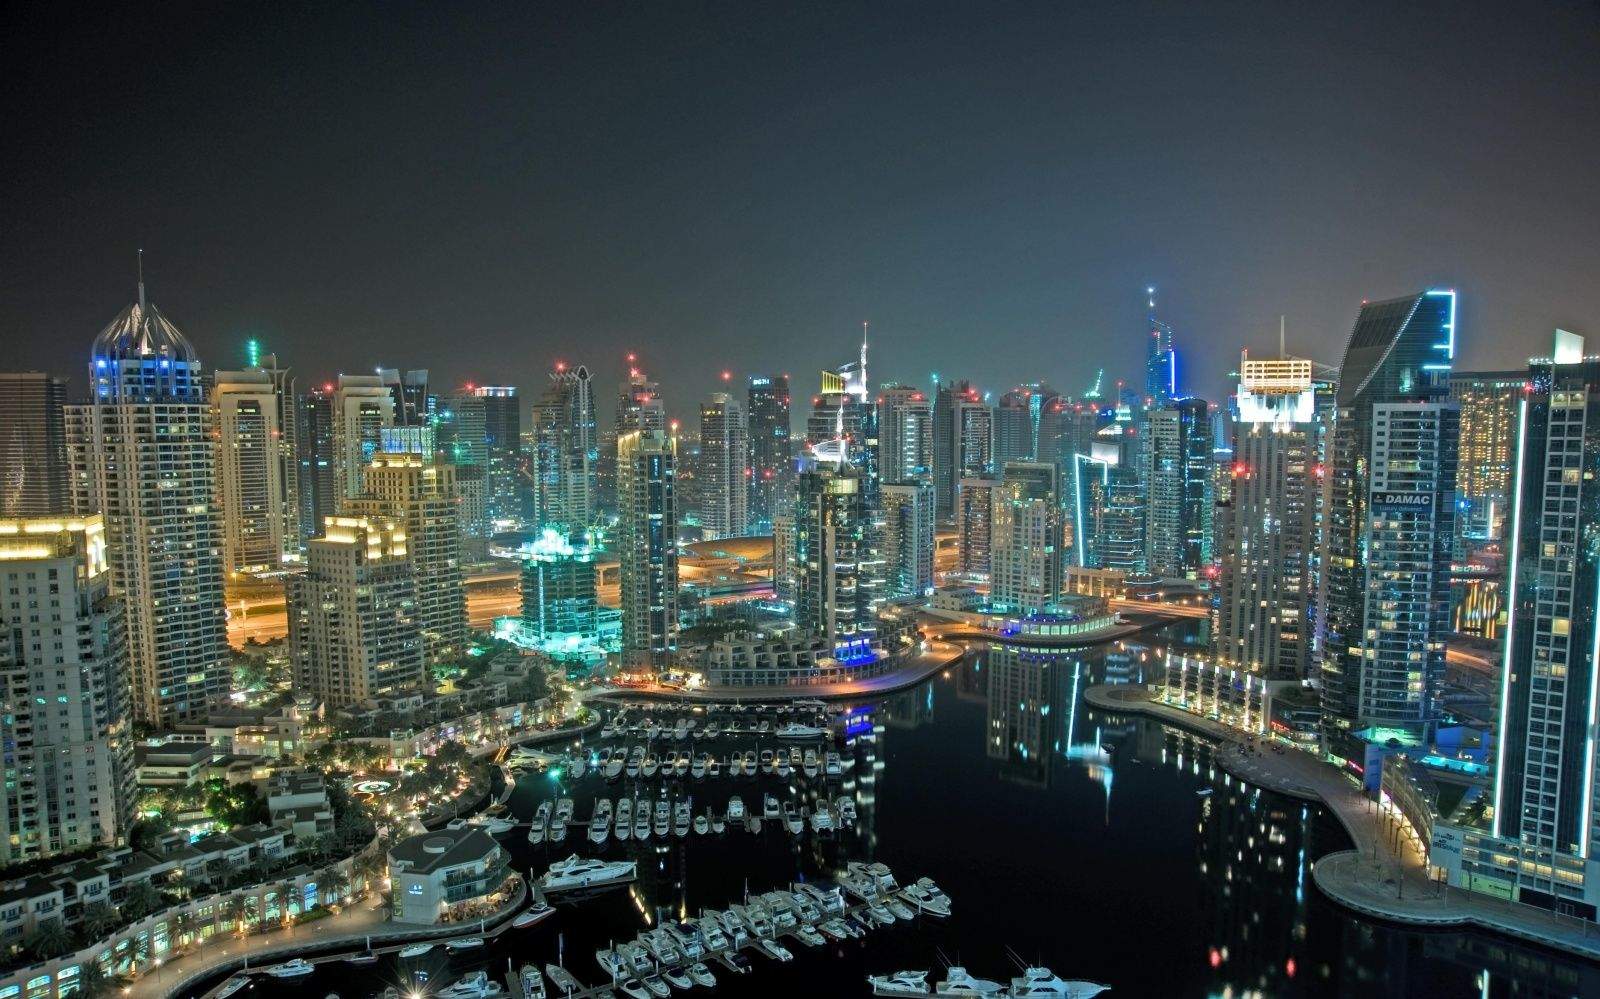 The futuristic skyline of Dubai.